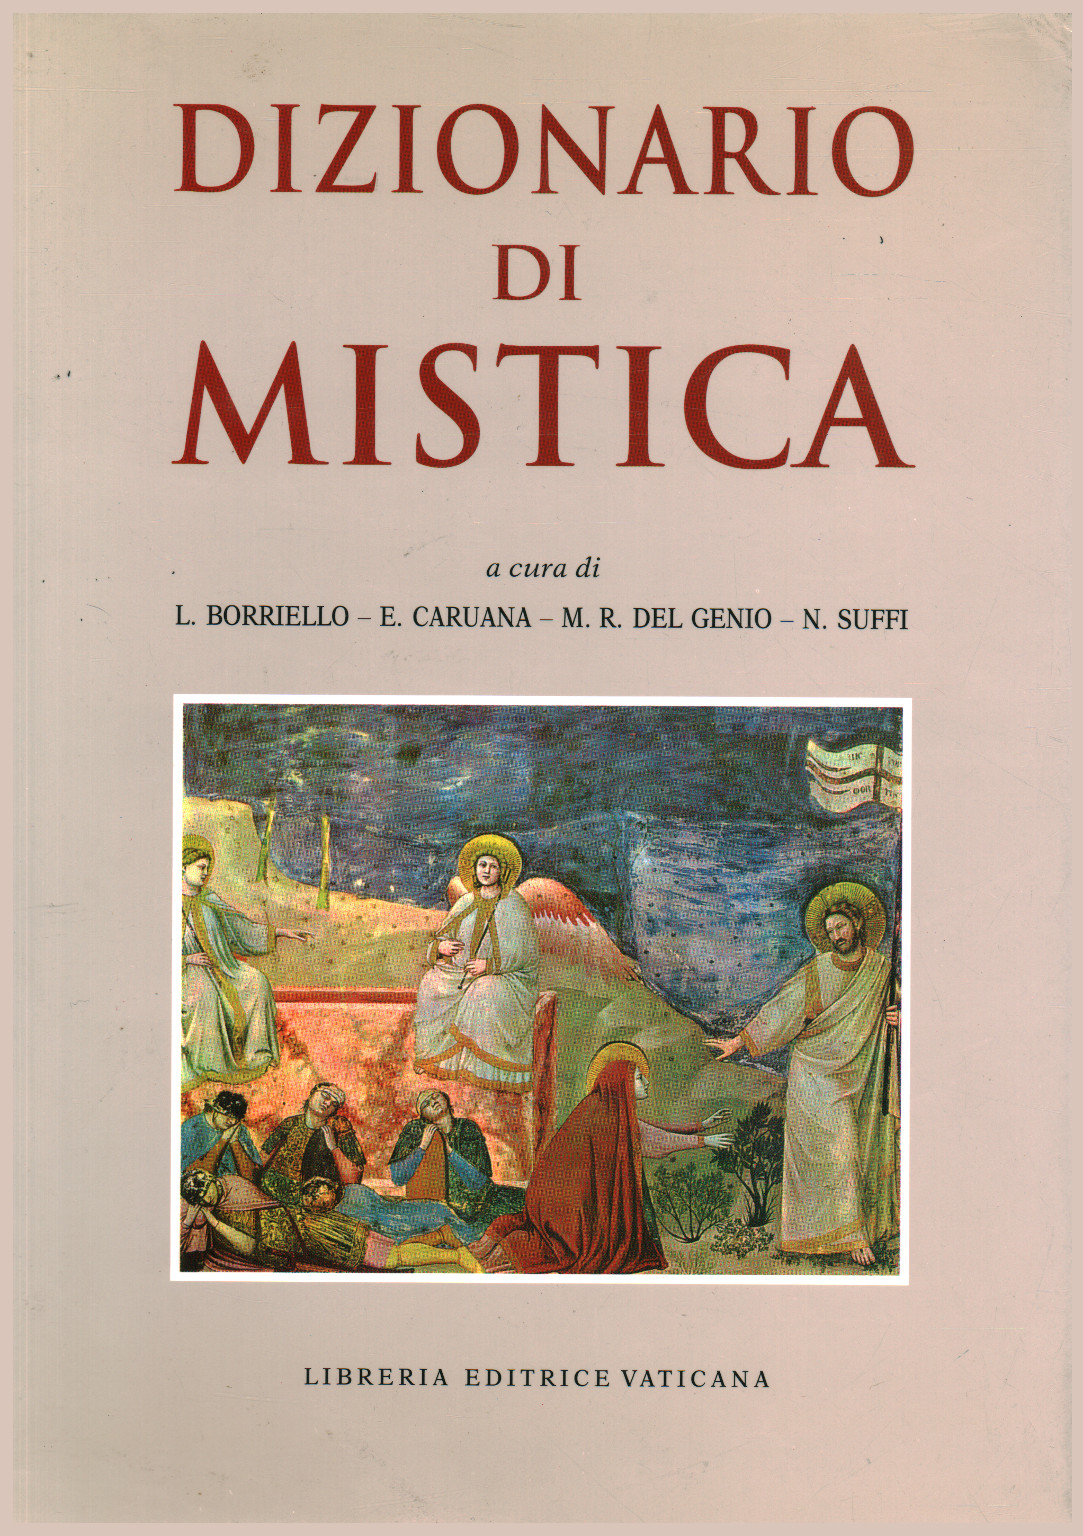 Dictionary of mysticism